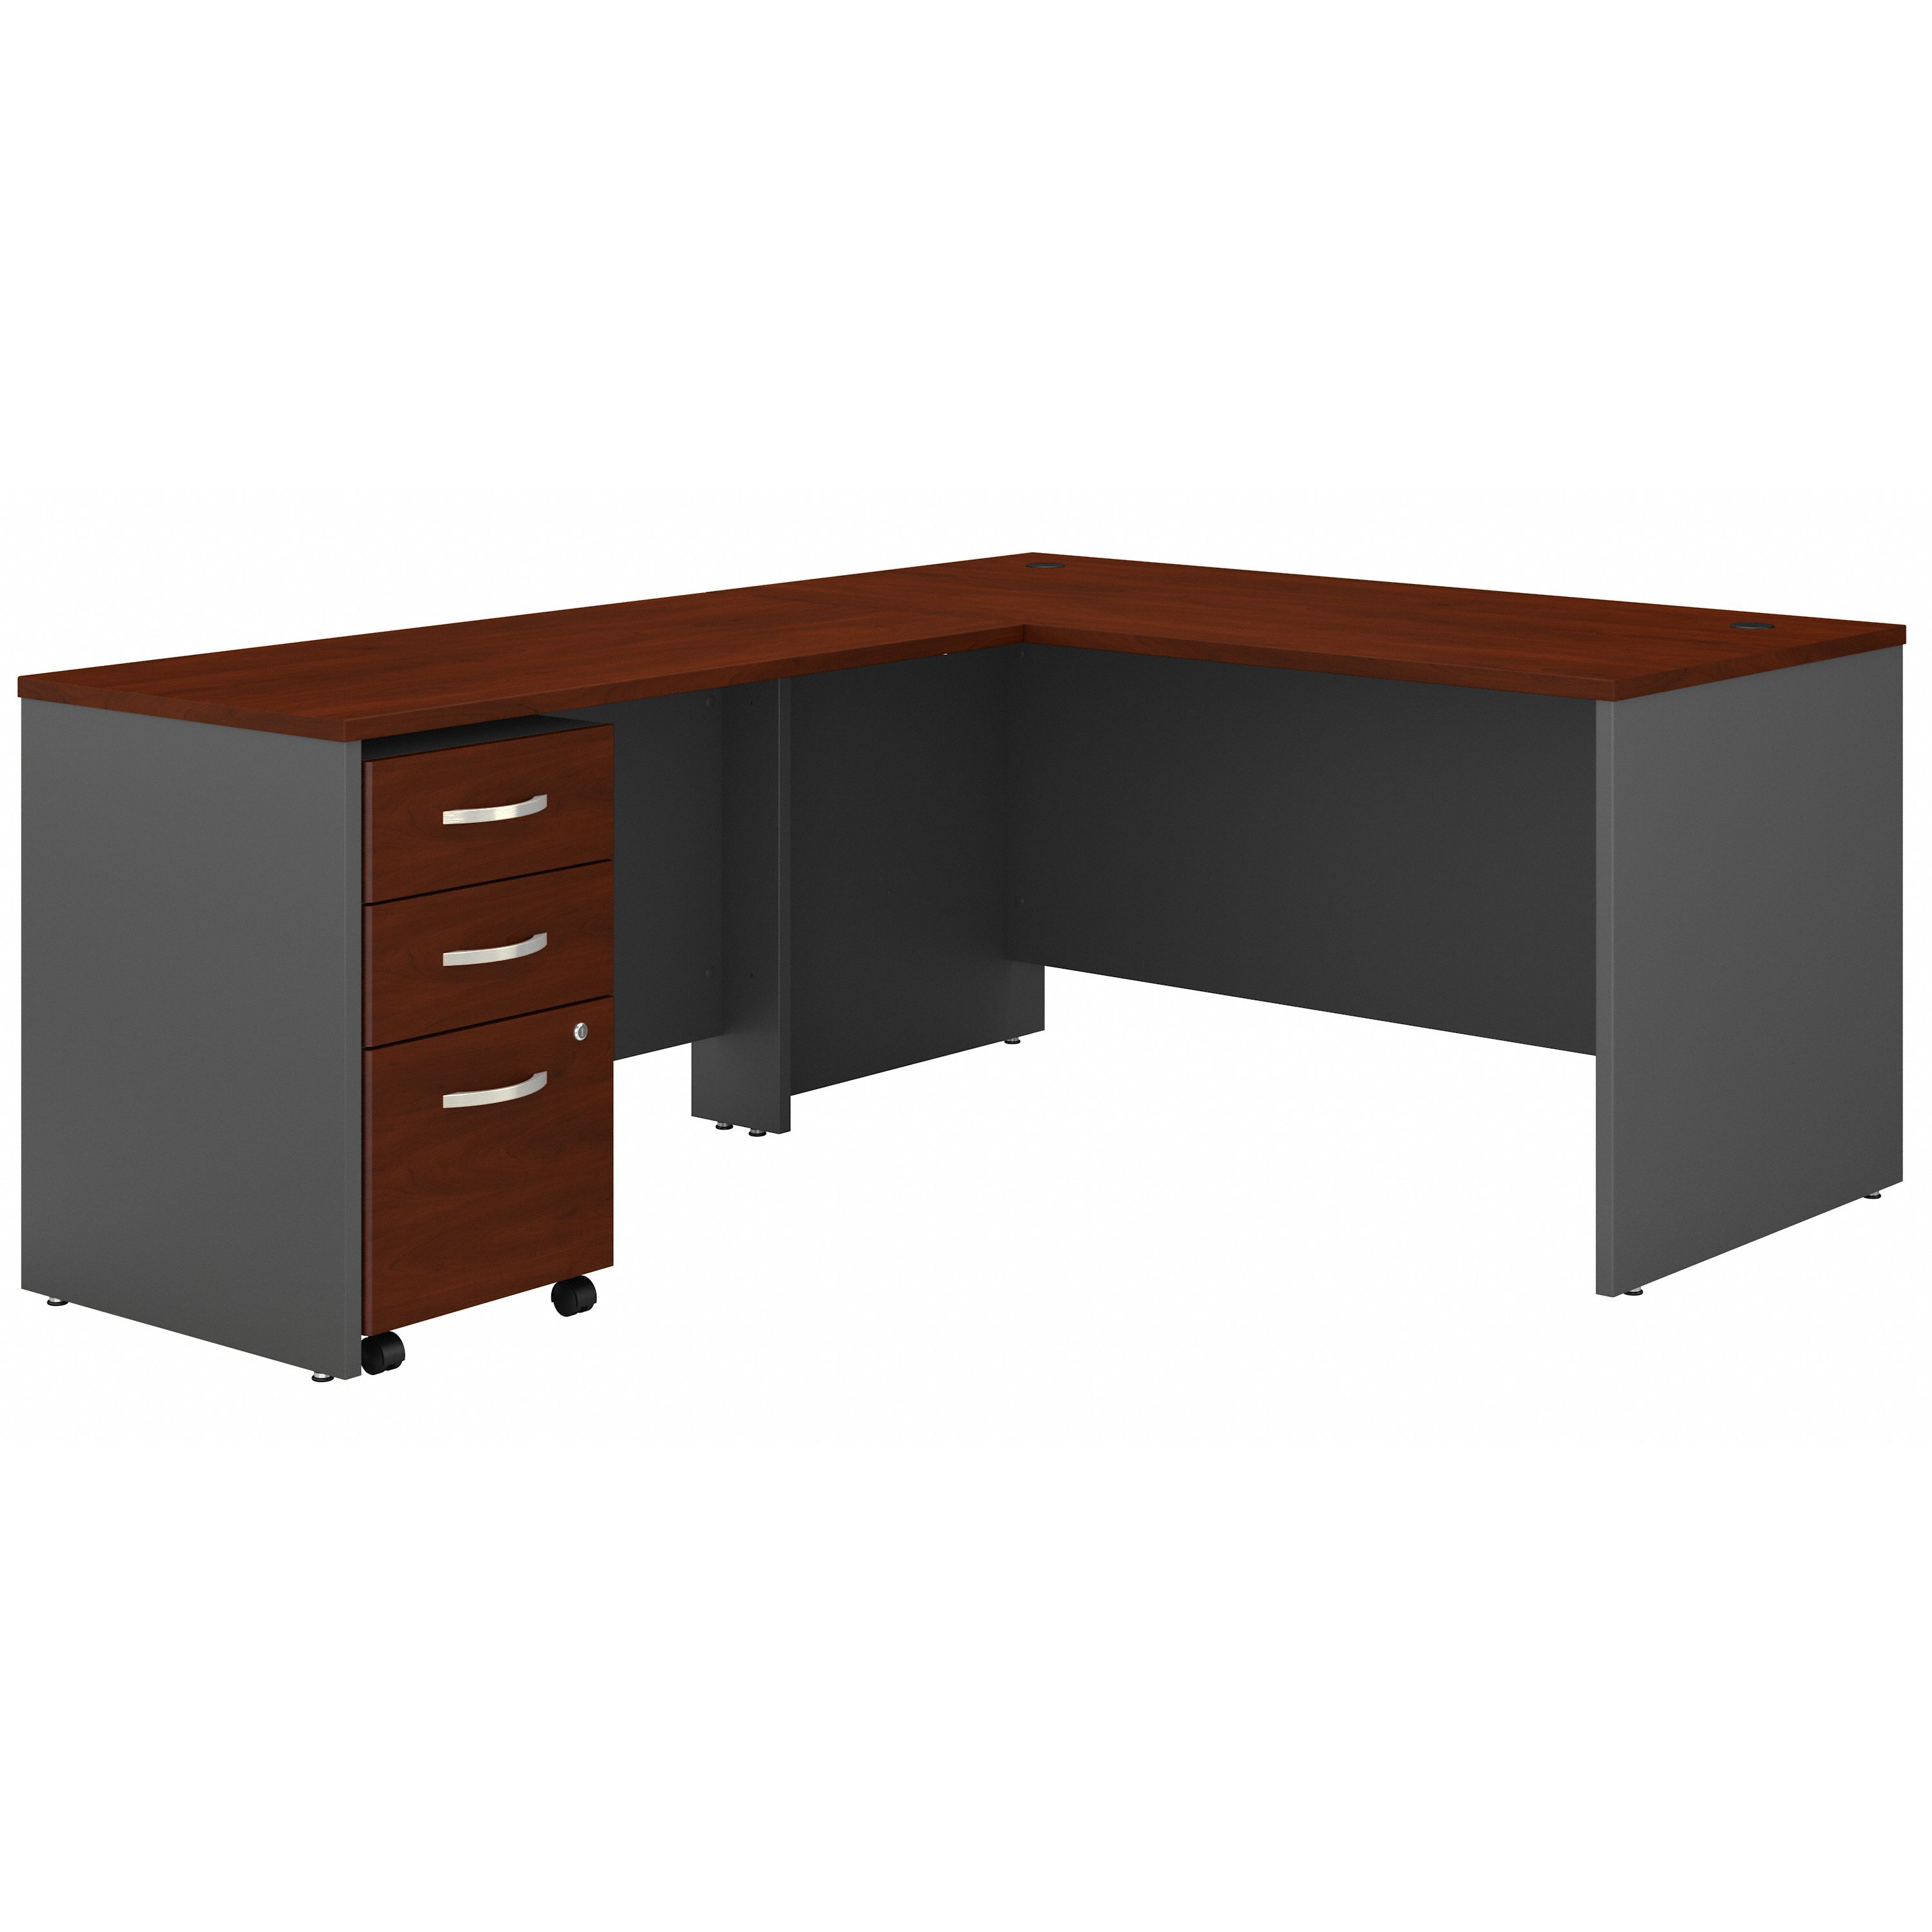 Shop Bush Business Furniture Series C 60W L Shaped Desk with 3 Drawer Mobile File Cabinet 02 SRC146HCSU #color_hansen cherry/graphite gray